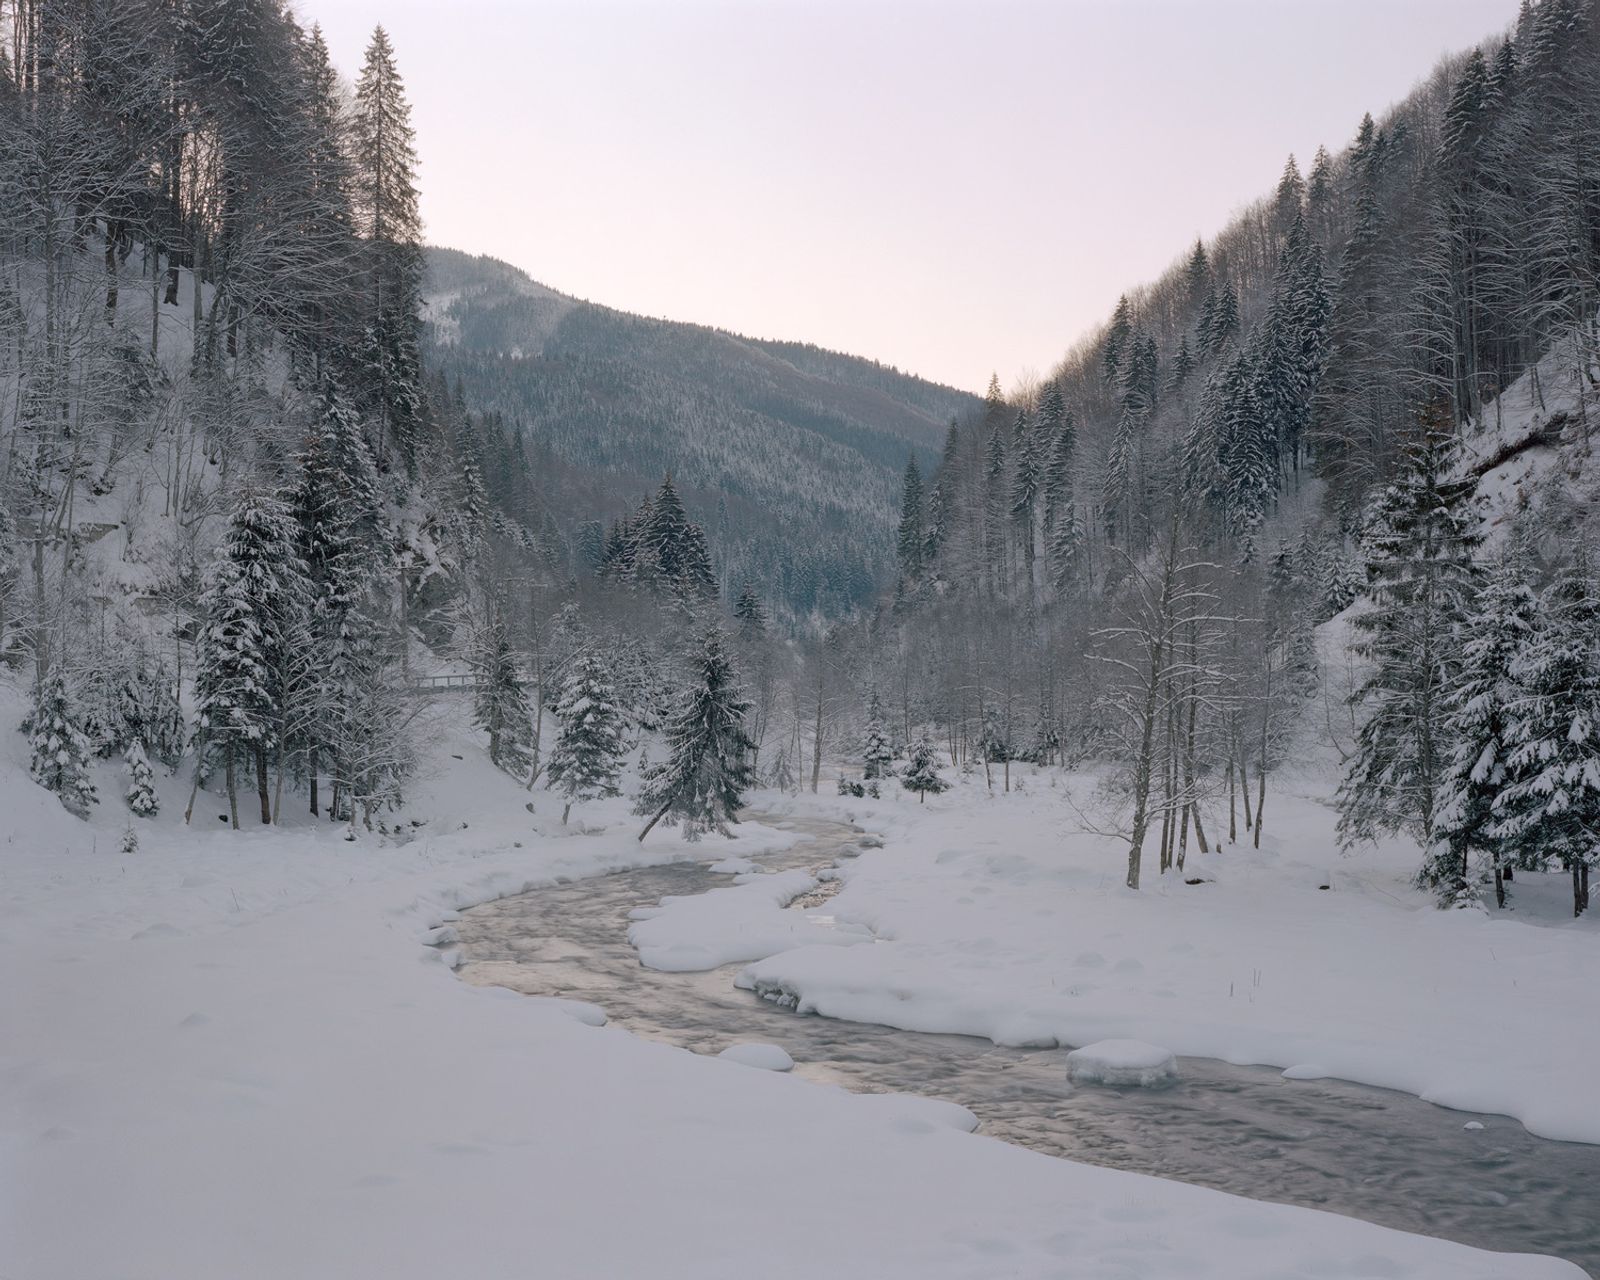 © Nicholas J.R. White - Targului River, proposed location for Beaver reintroduction programme, Raul Targului Hunting Area [January, 2018]